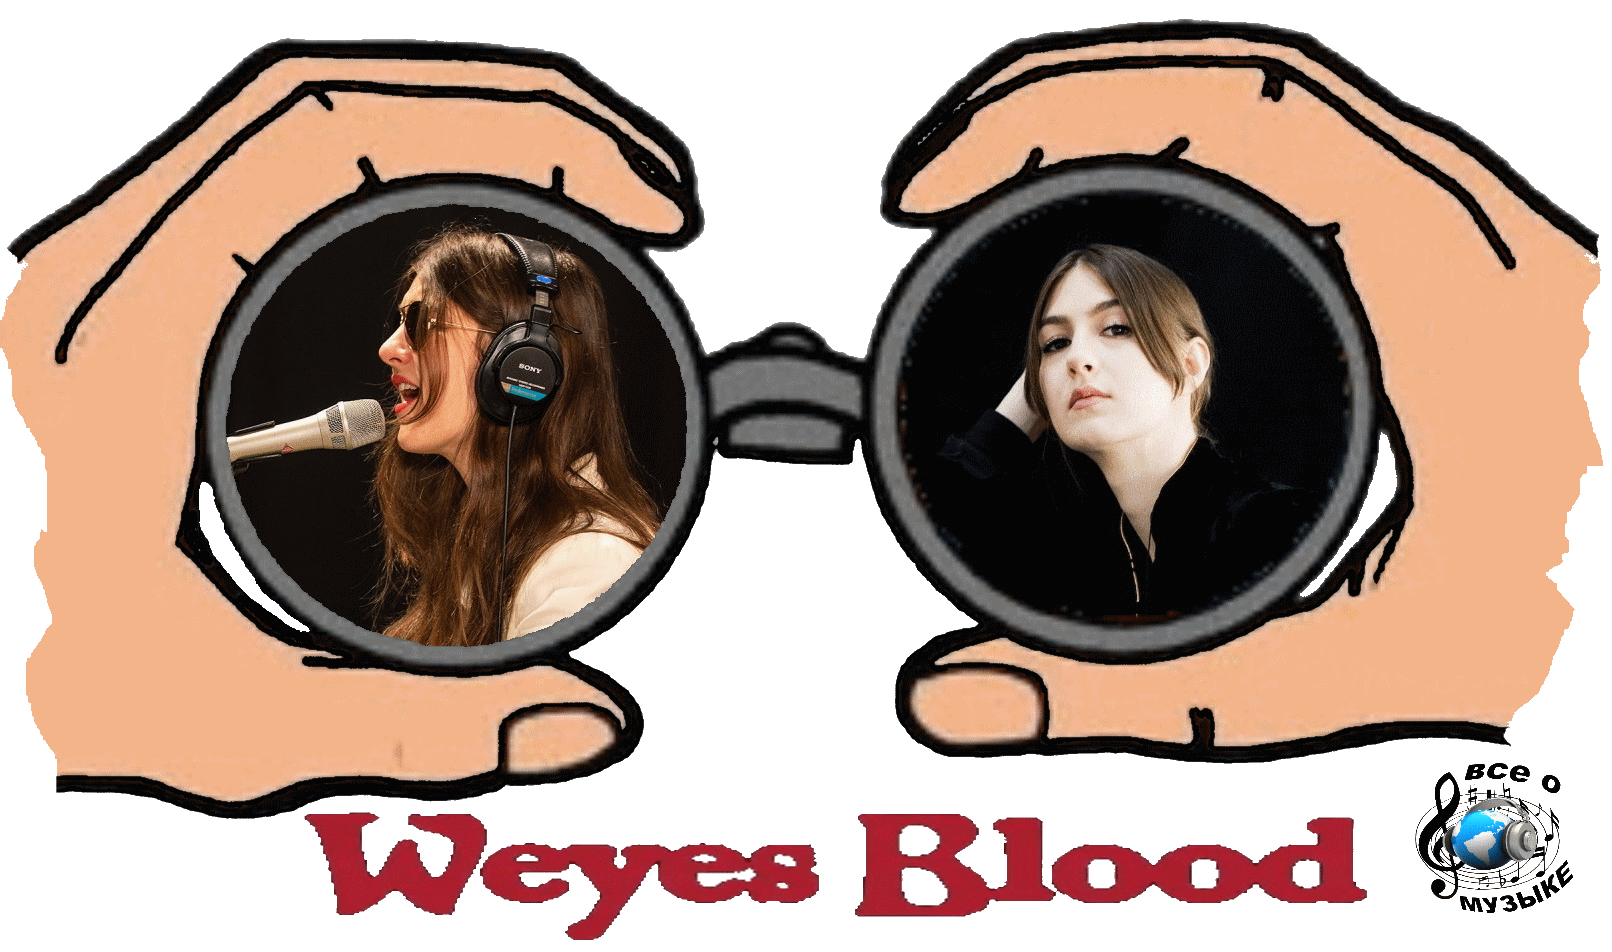 Weyes Blood